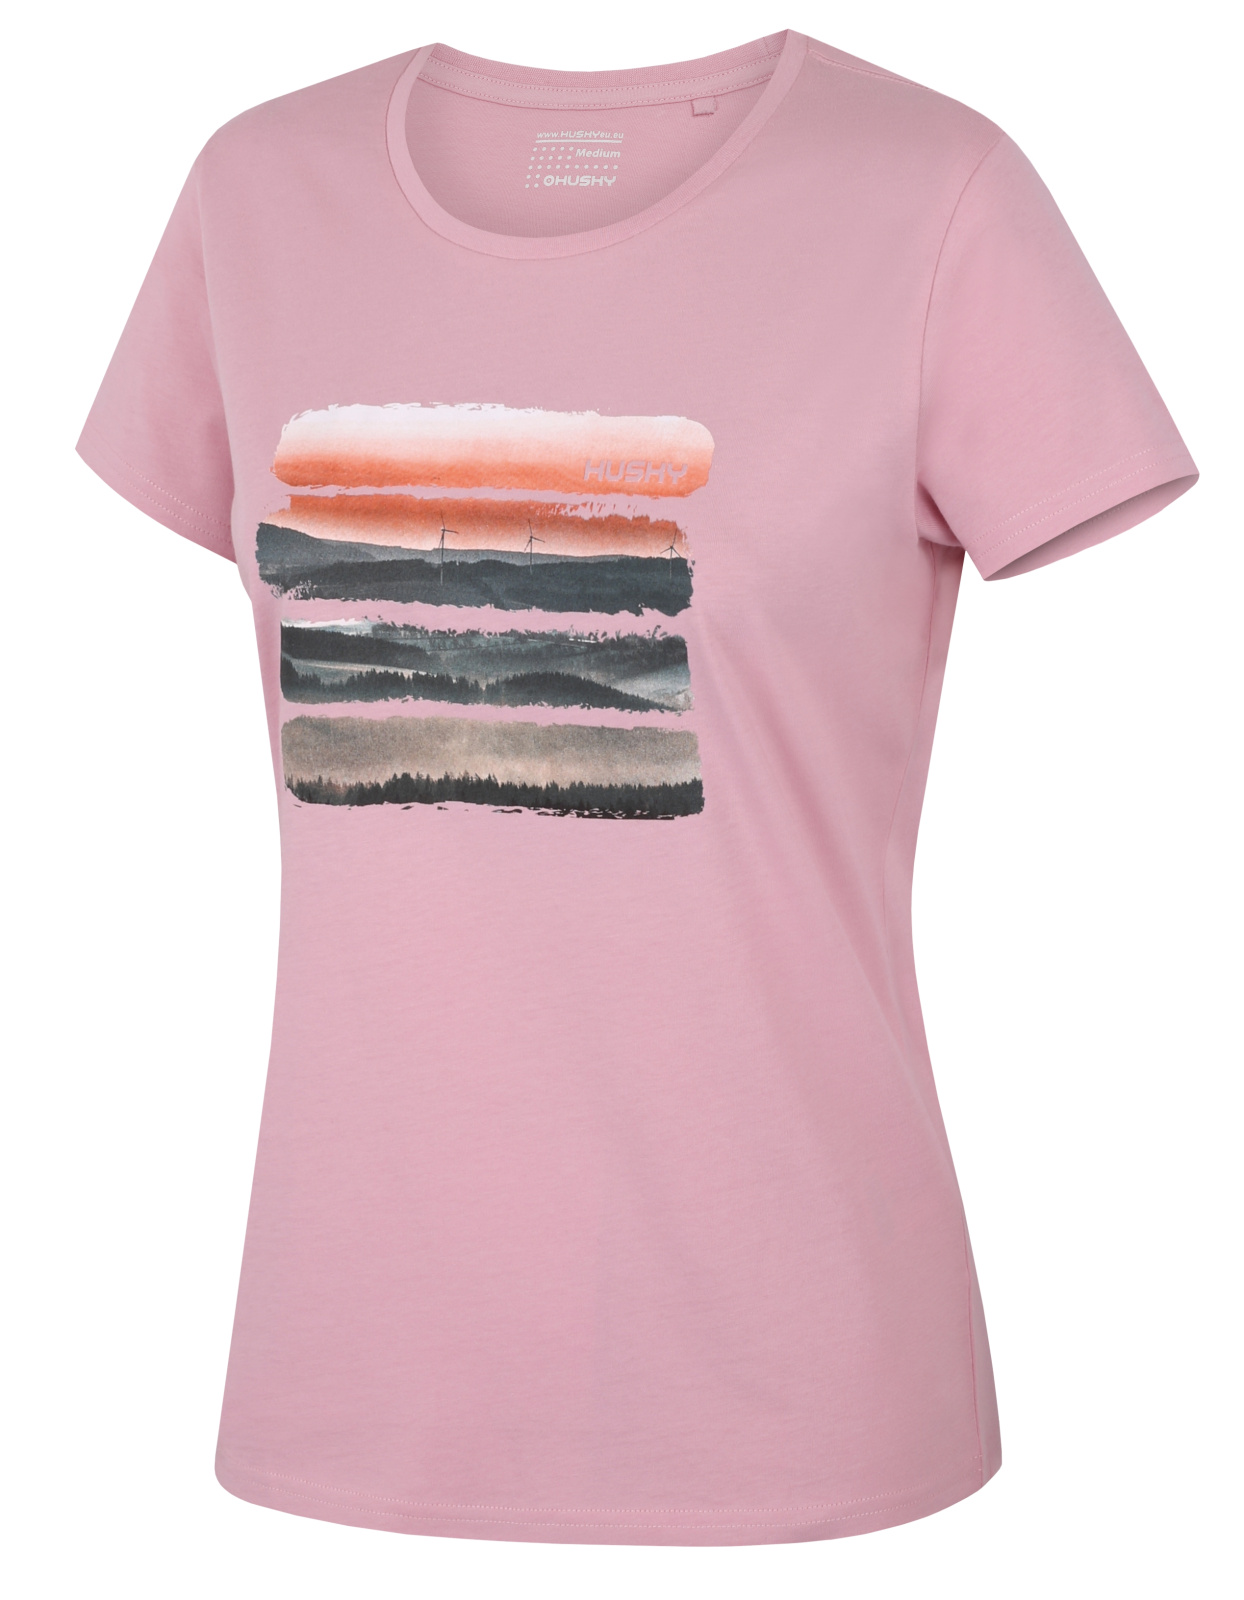 Women's cotton T-shirt HUSKY Tee Vane L light pink